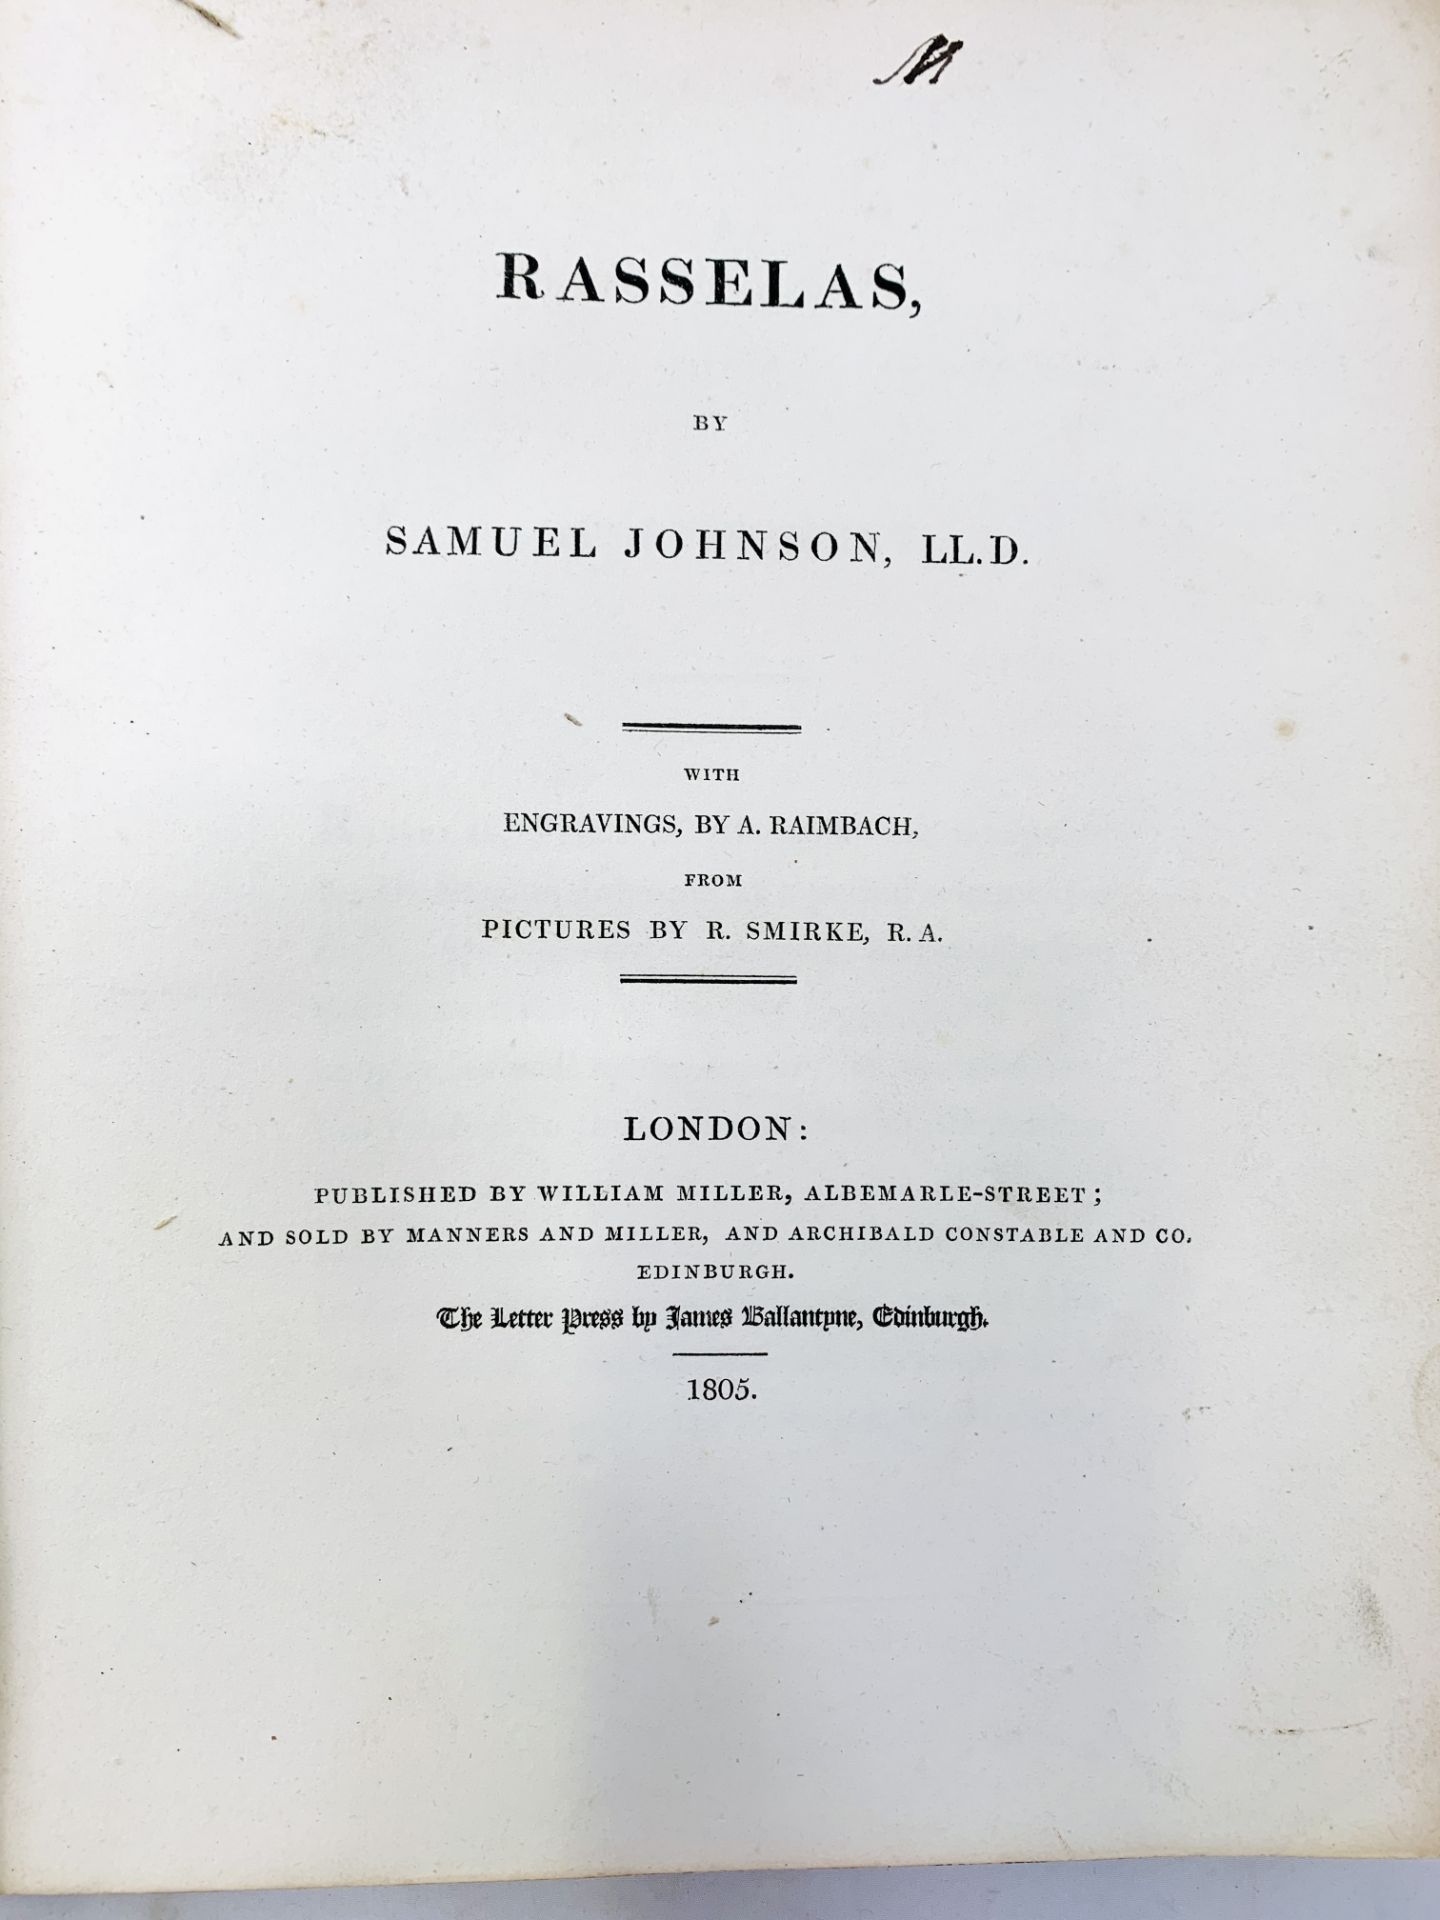 Rasselas by Samuel Johnson, 1805 - Image 3 of 4